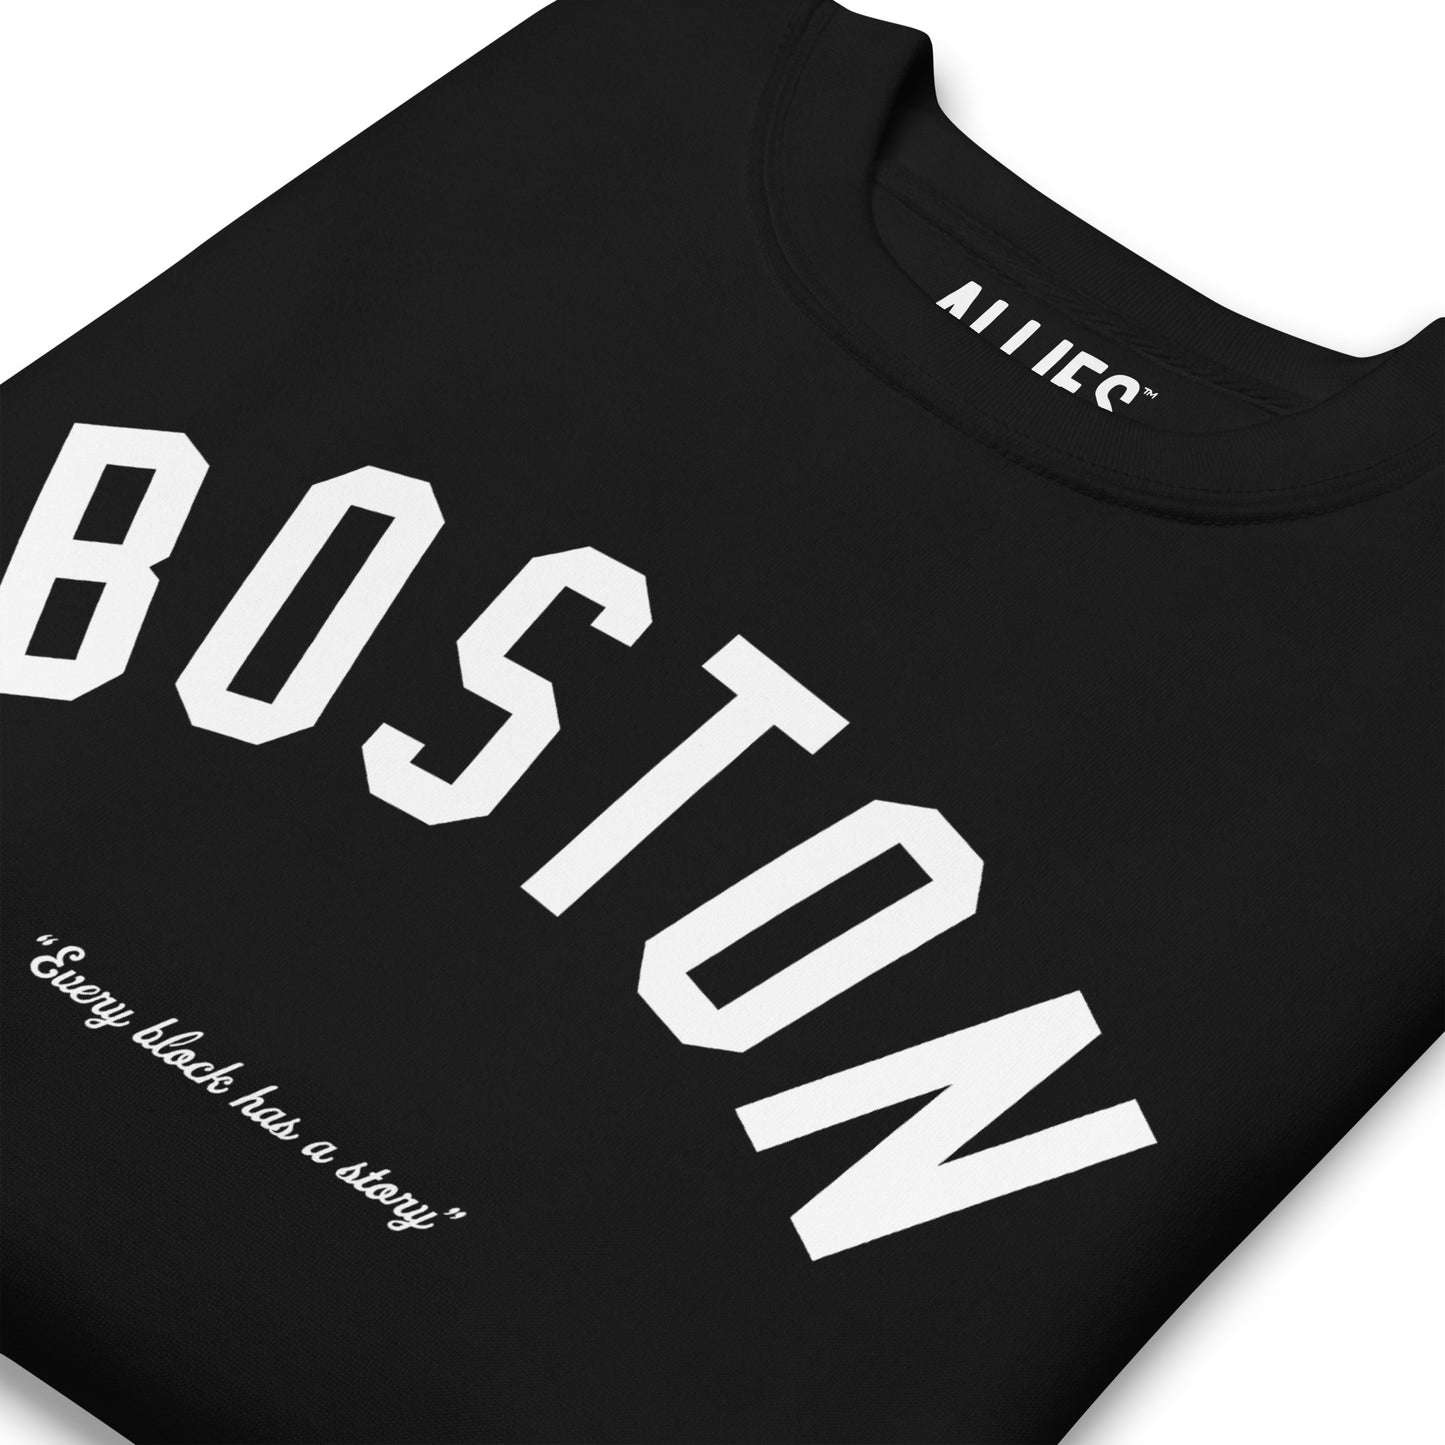 Boston Story Sweatshirt